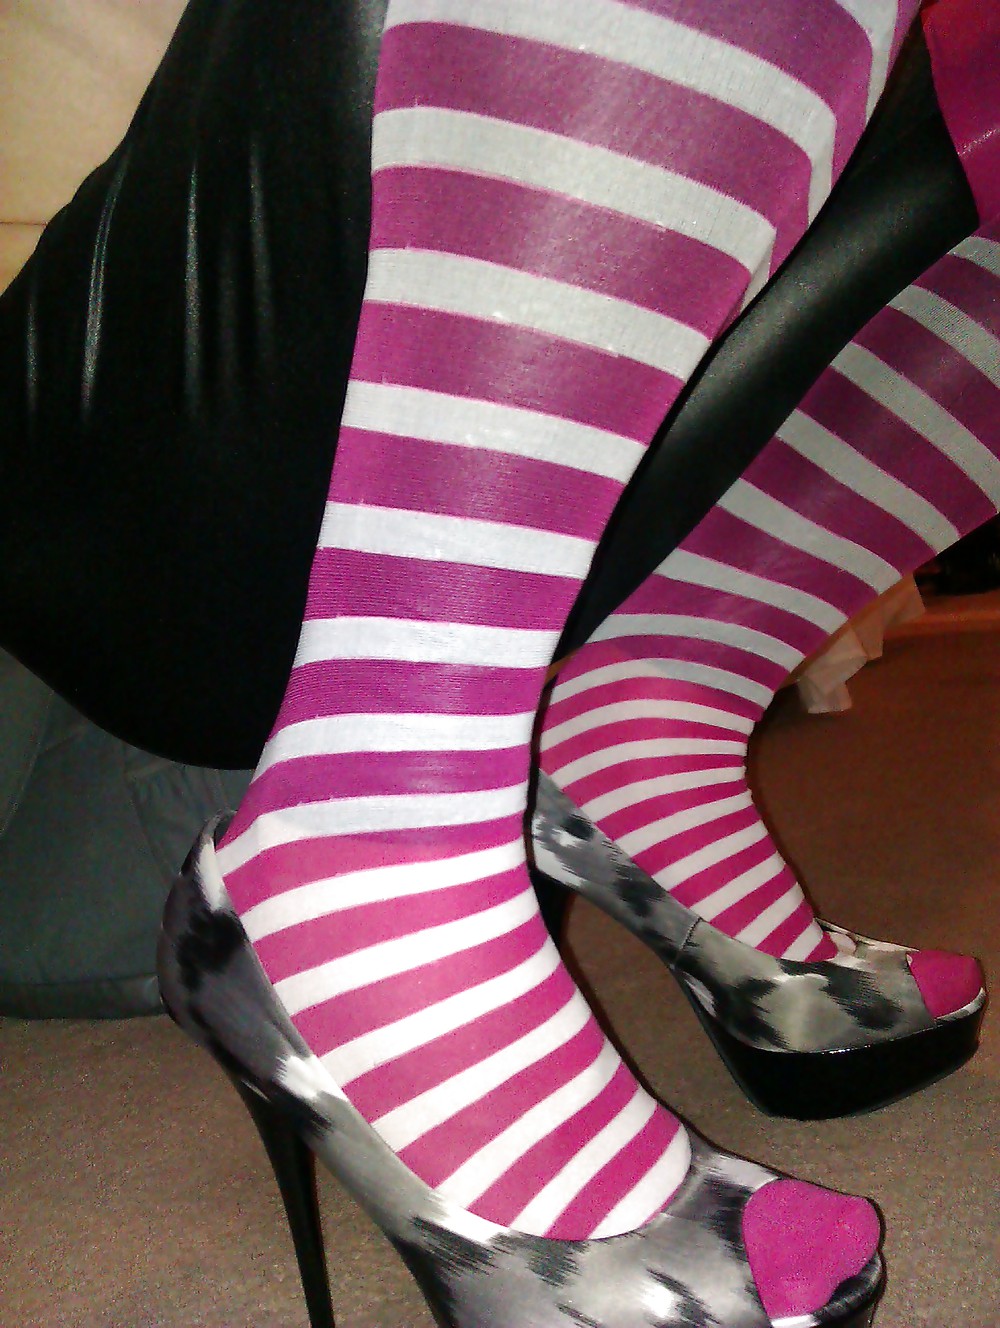 My heels and stocking socks